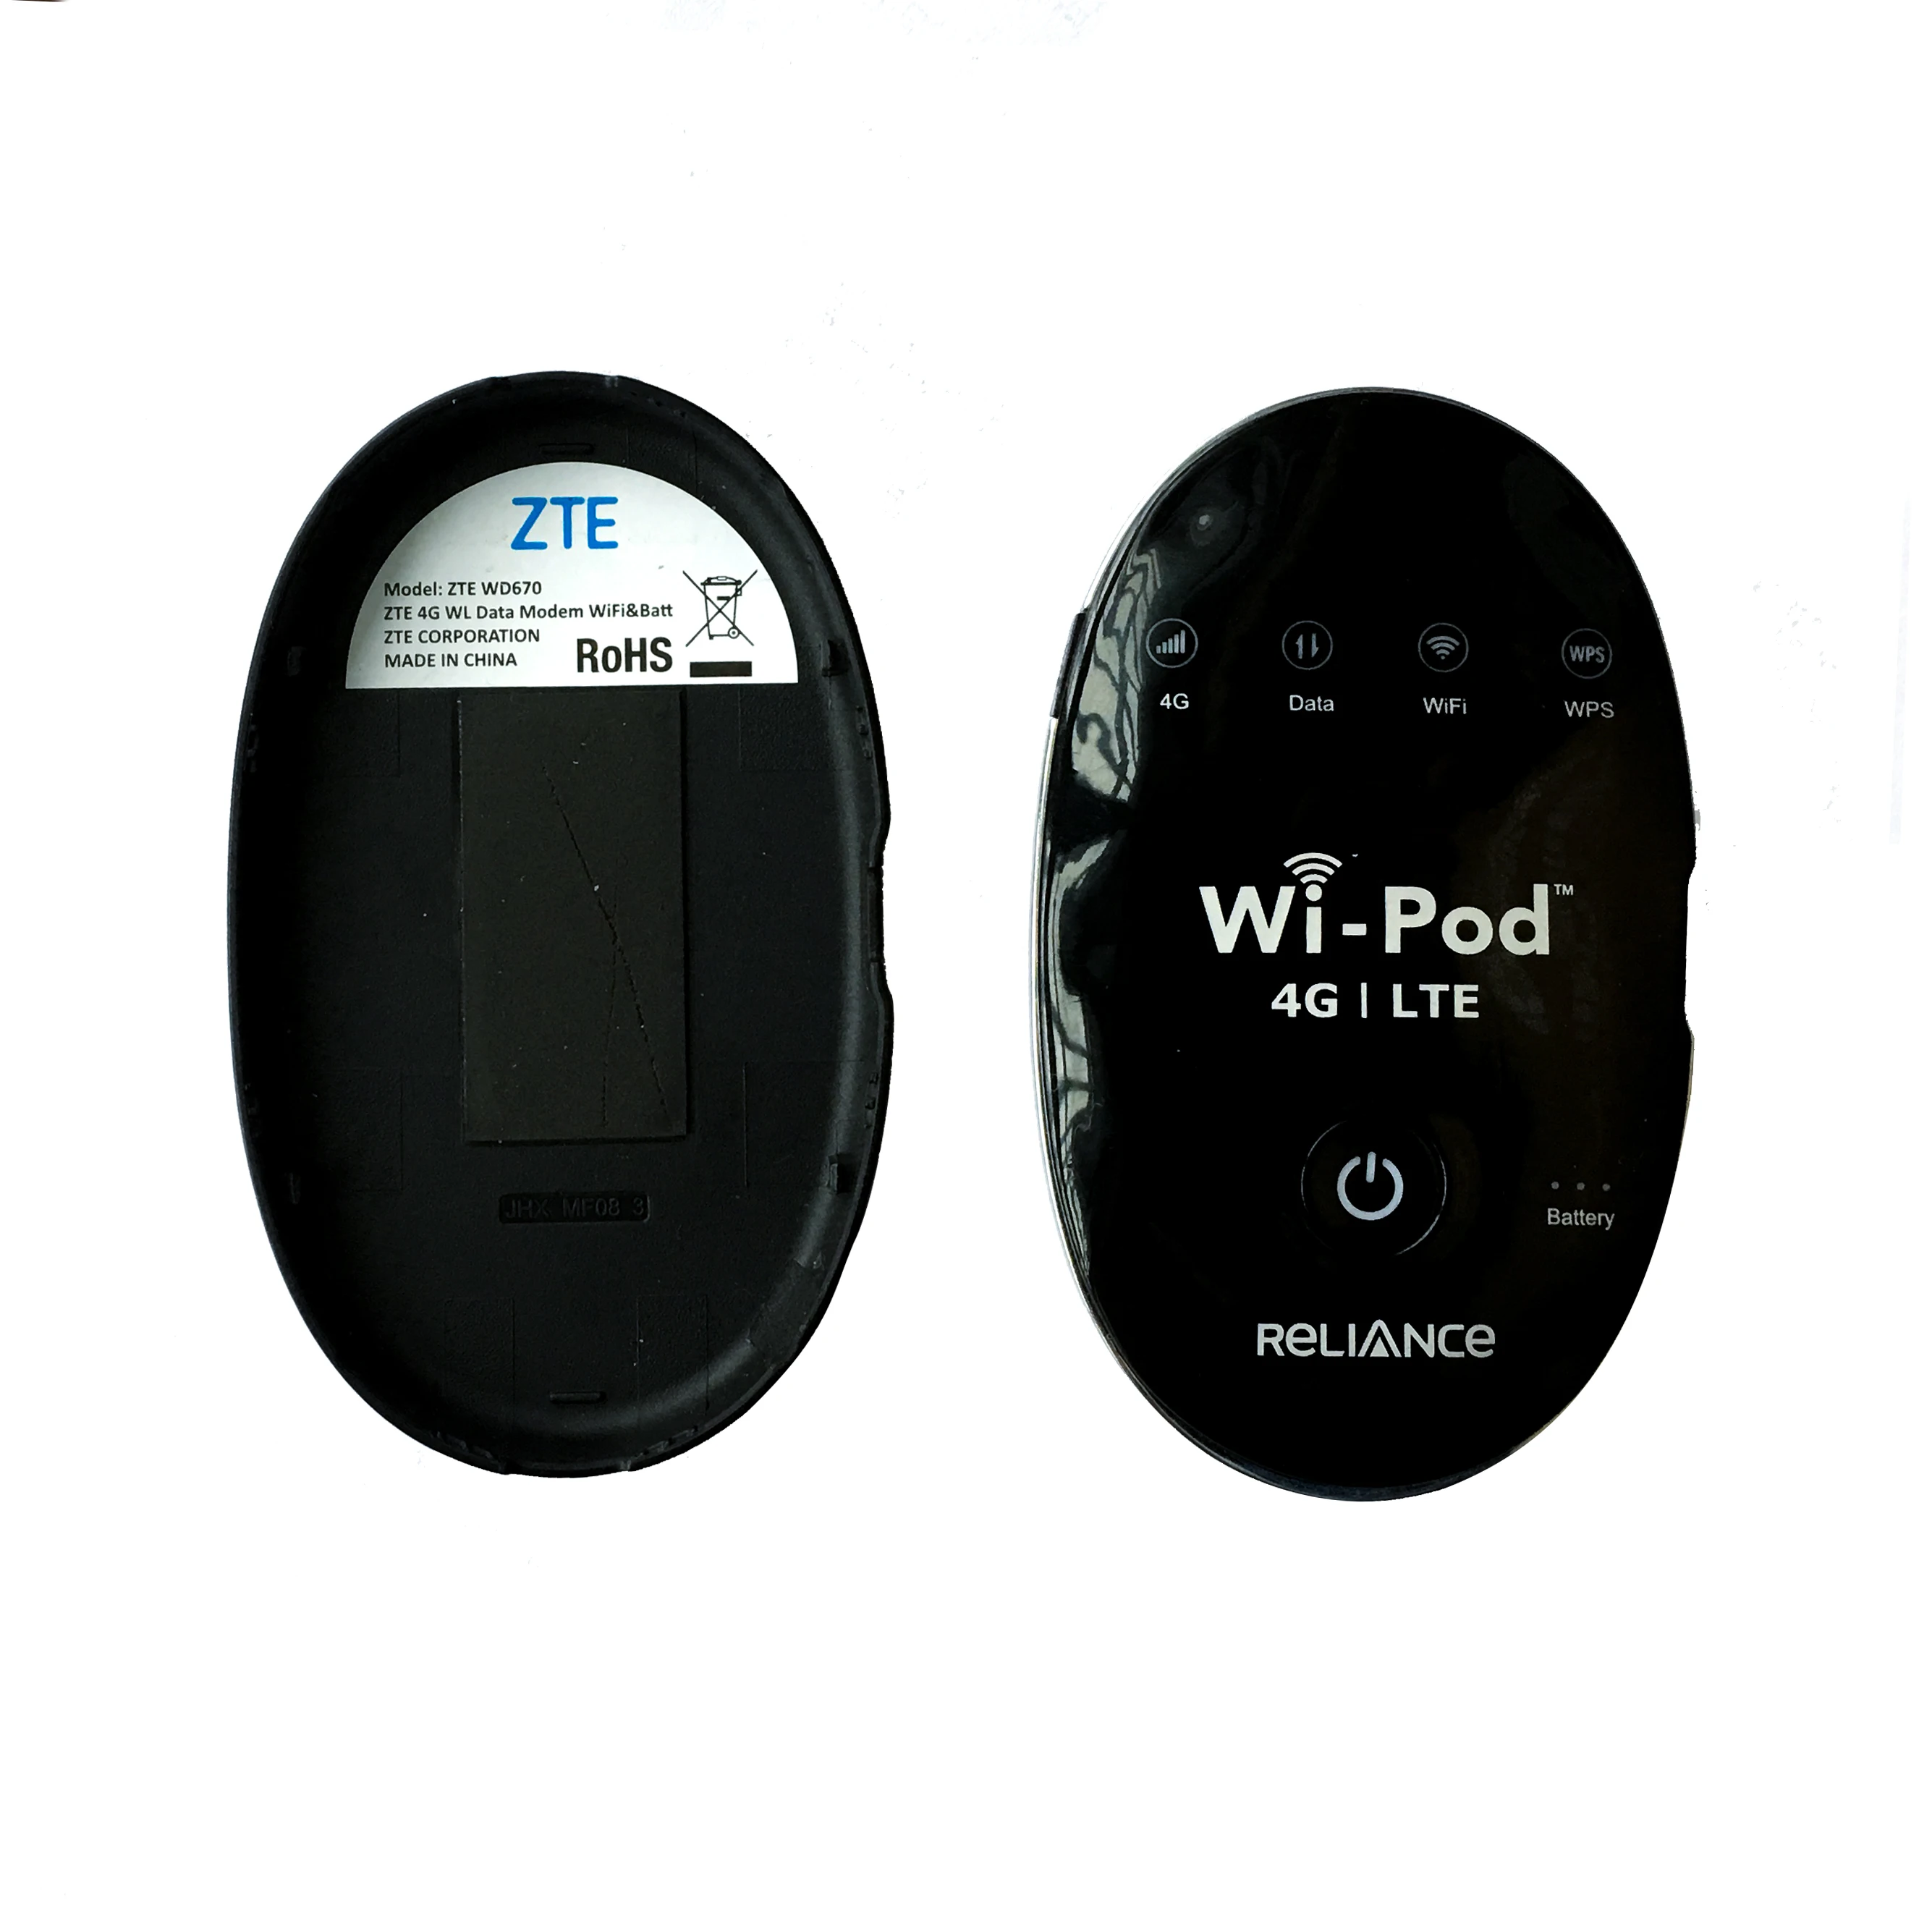 

2019 New Unlocked ZTE WD670 WI POD 4G LTE Pocket Wi fi Mobile Hotspot Wireless 4g wifi Router tp link, Black